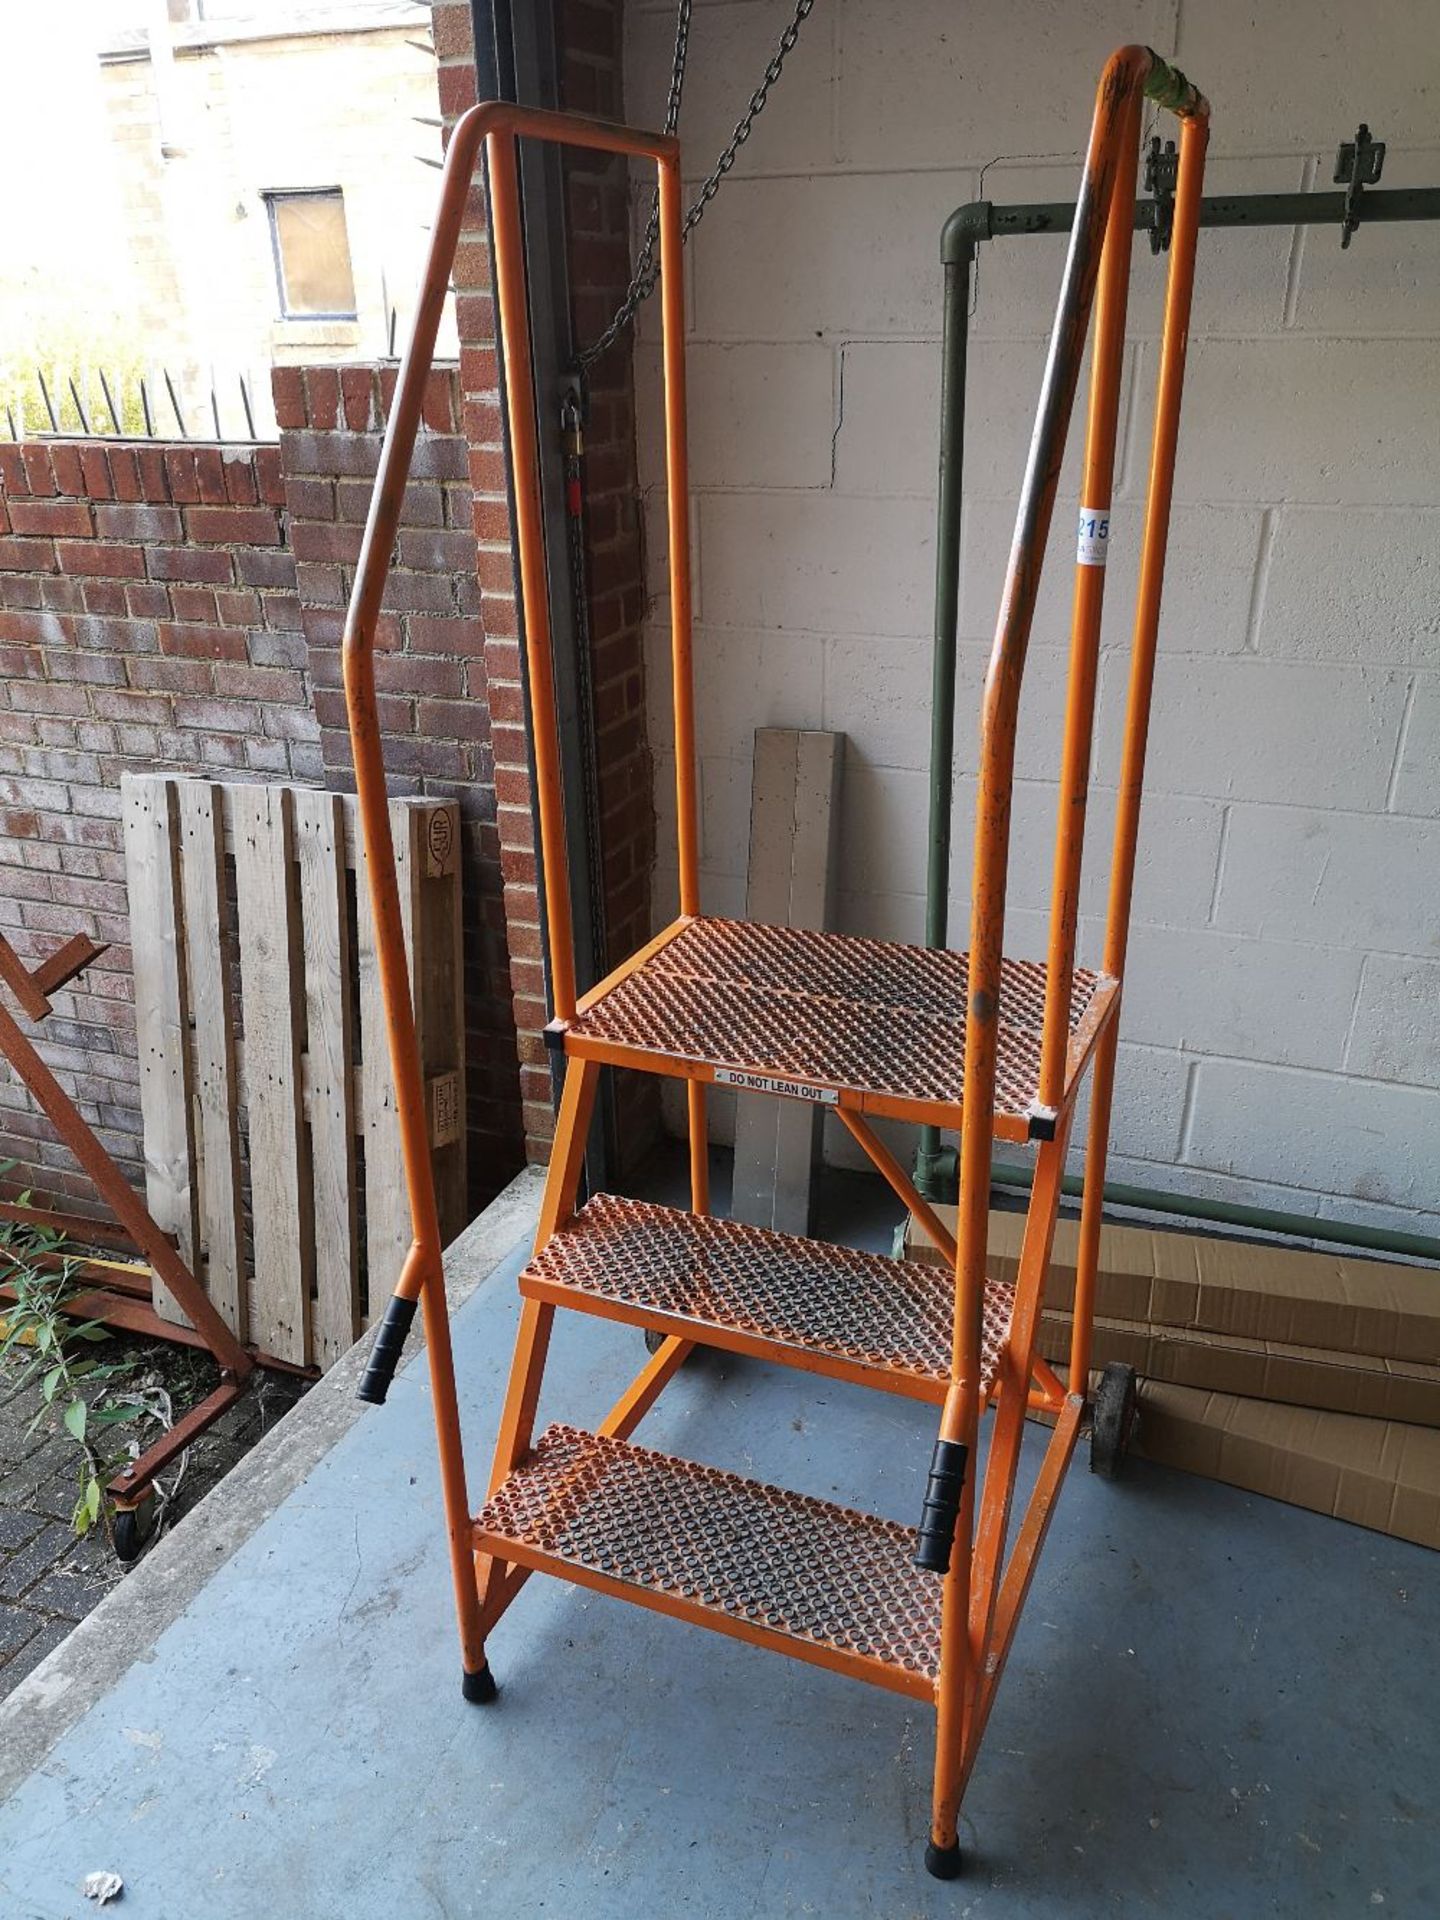 Three tread Mobile Warehouse Ladder - Image 2 of 3